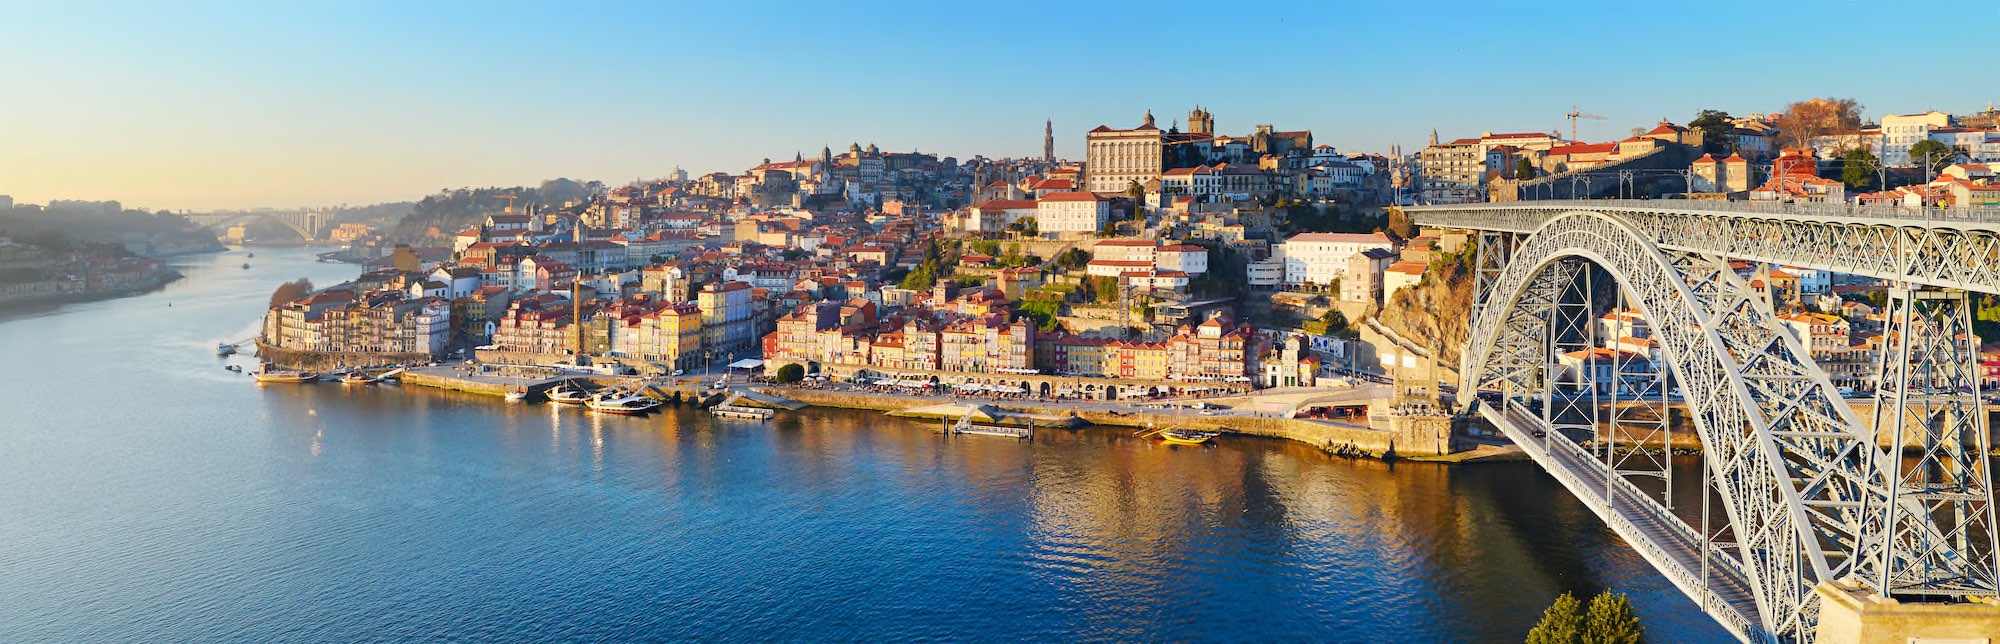 Portugal Urlaub in Porto Copyright © AdobeStock 77400789 joyt